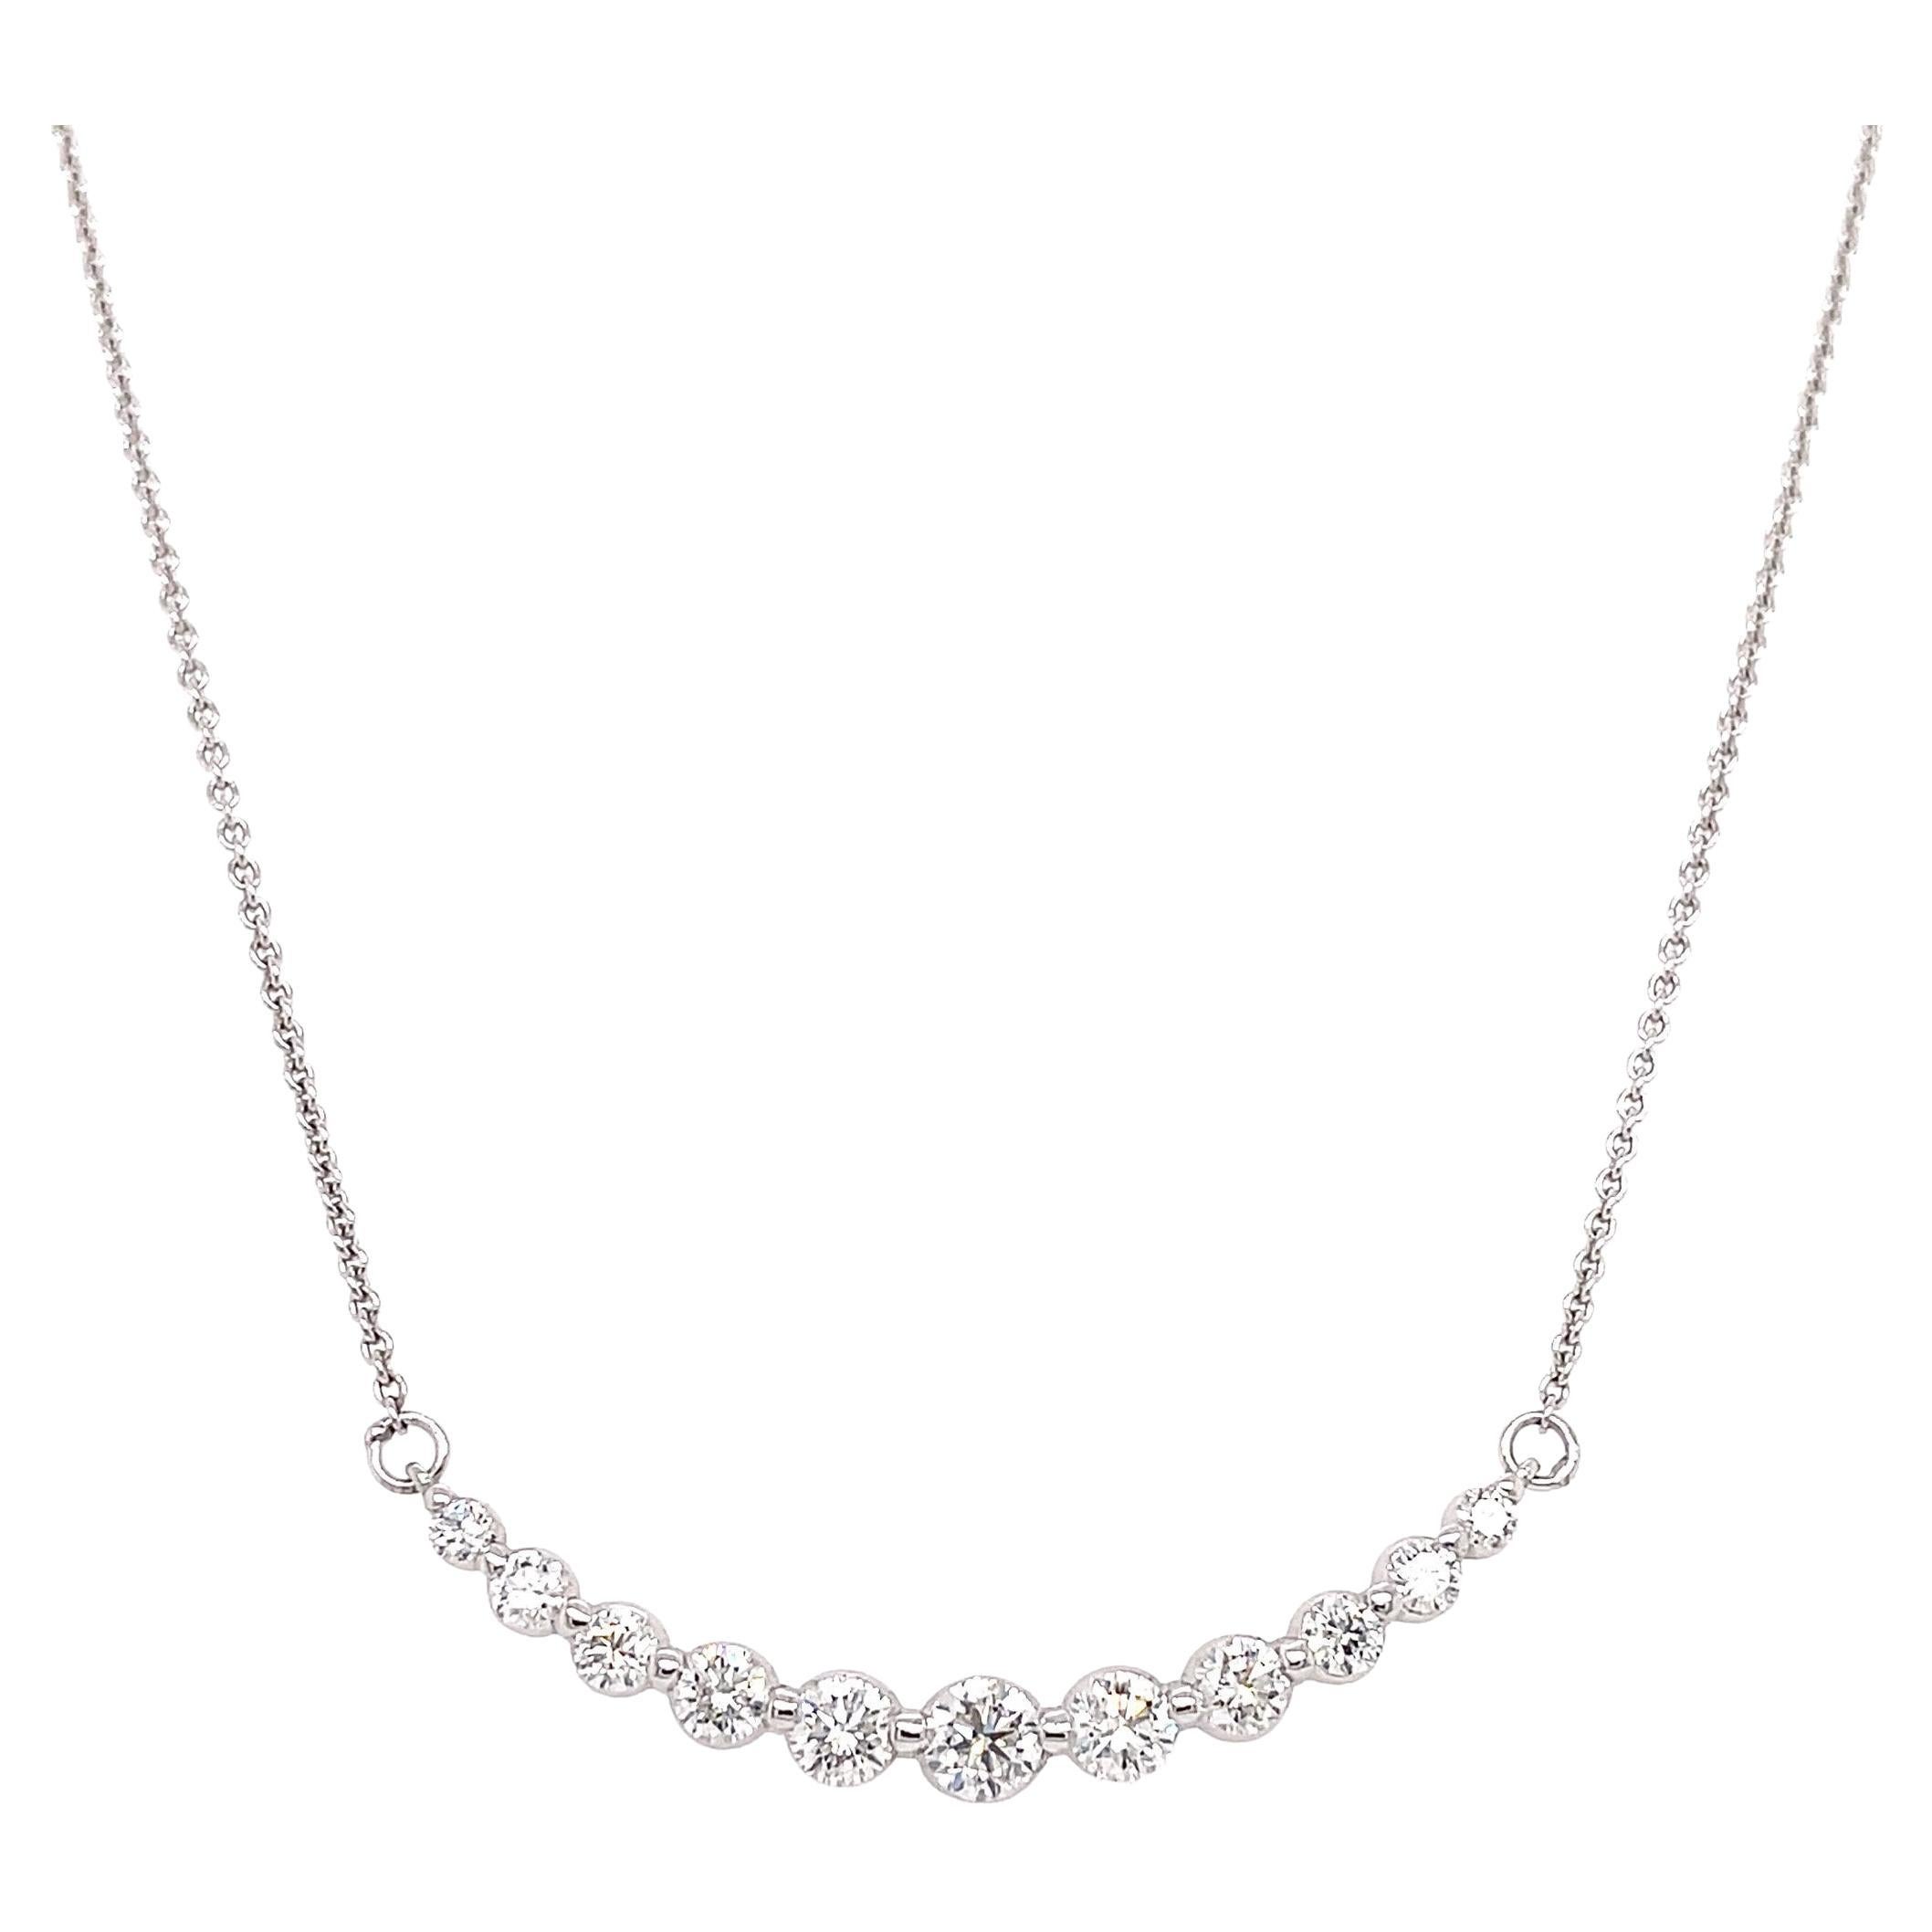 0.75 Carat Eleven Diamond Graduated Necklace in 18K White Gold